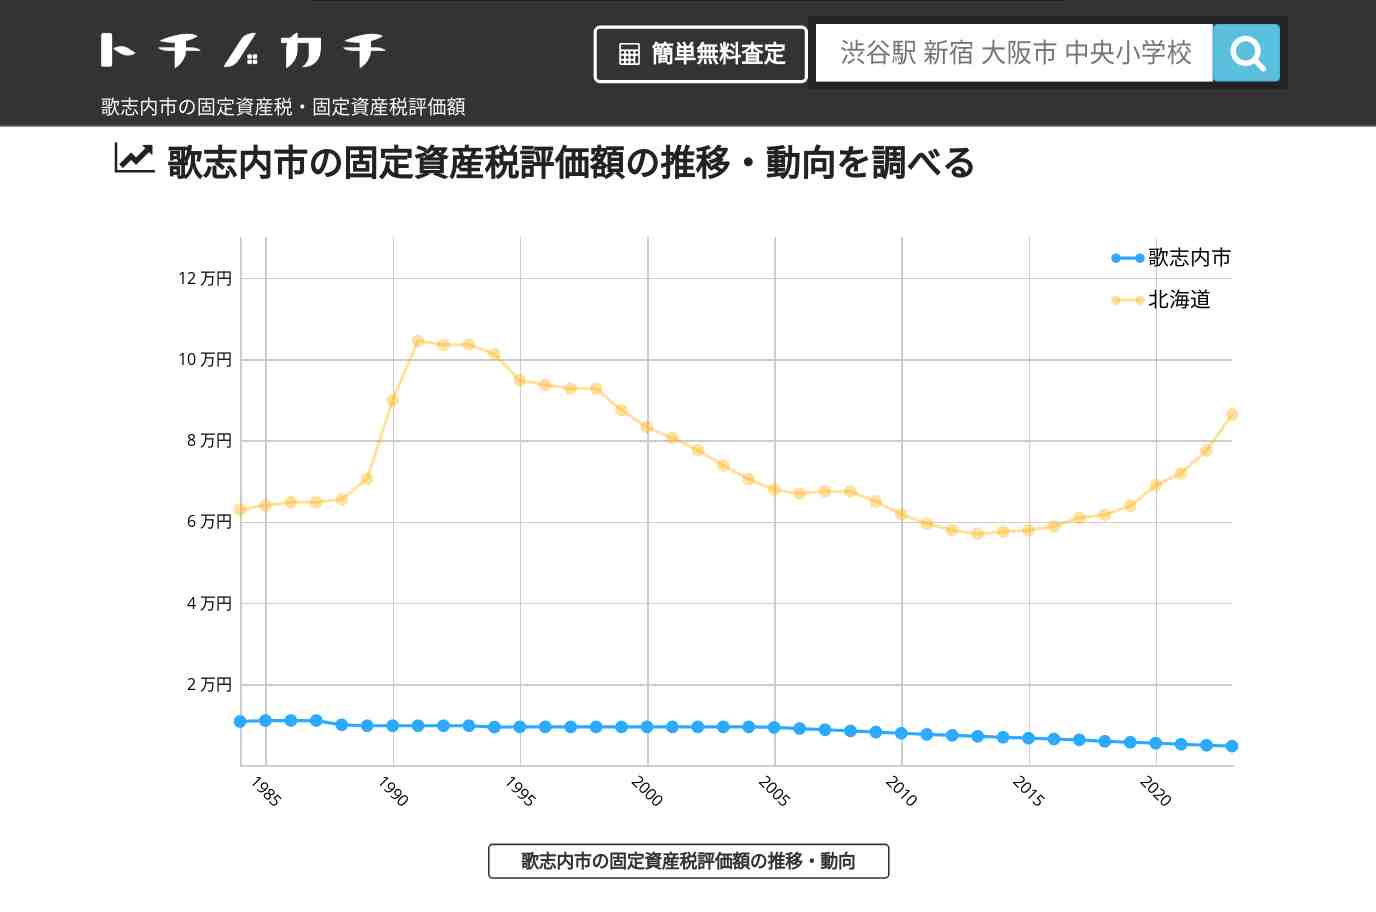 歌志内市(北海道)の固定資産税・固定資産税評価額 | トチノカチ